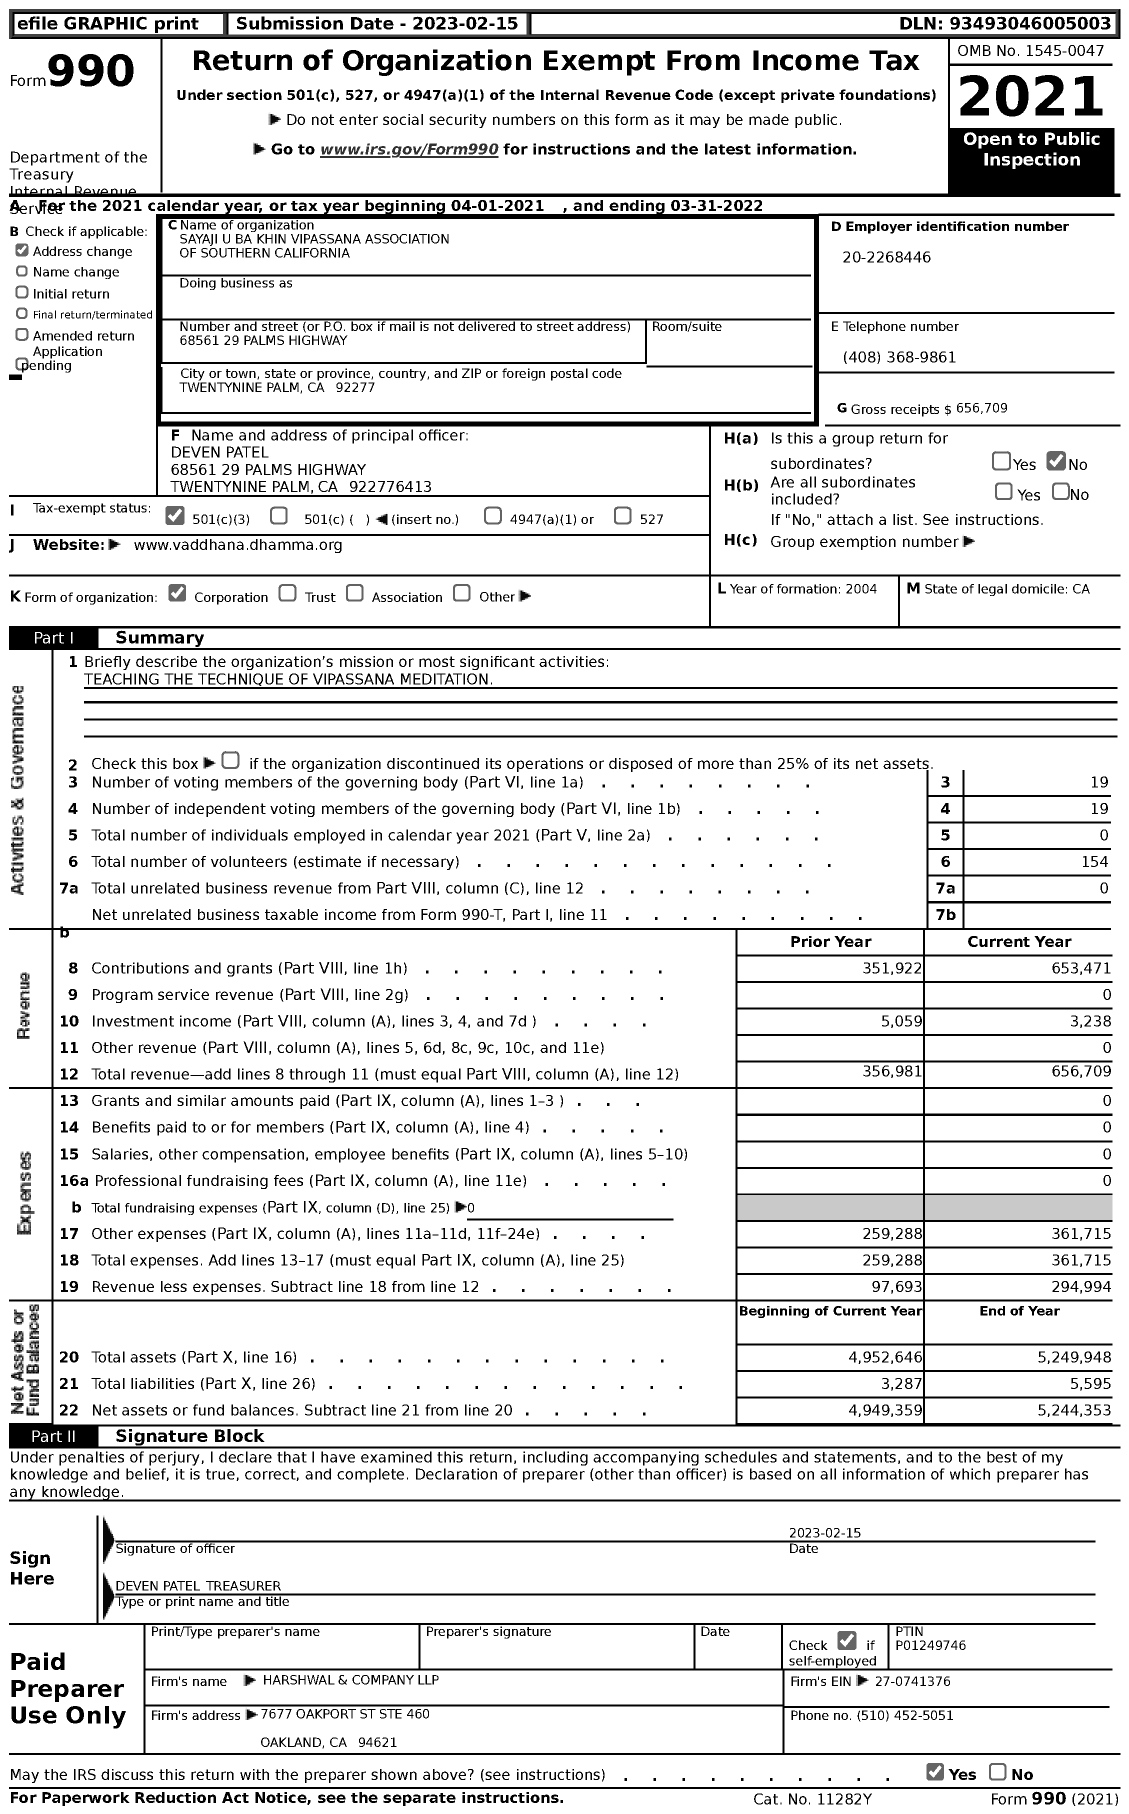 Image of first page of 2021 Form 990 for Sayaji U Ba Khin Vipassana Association of Southern California